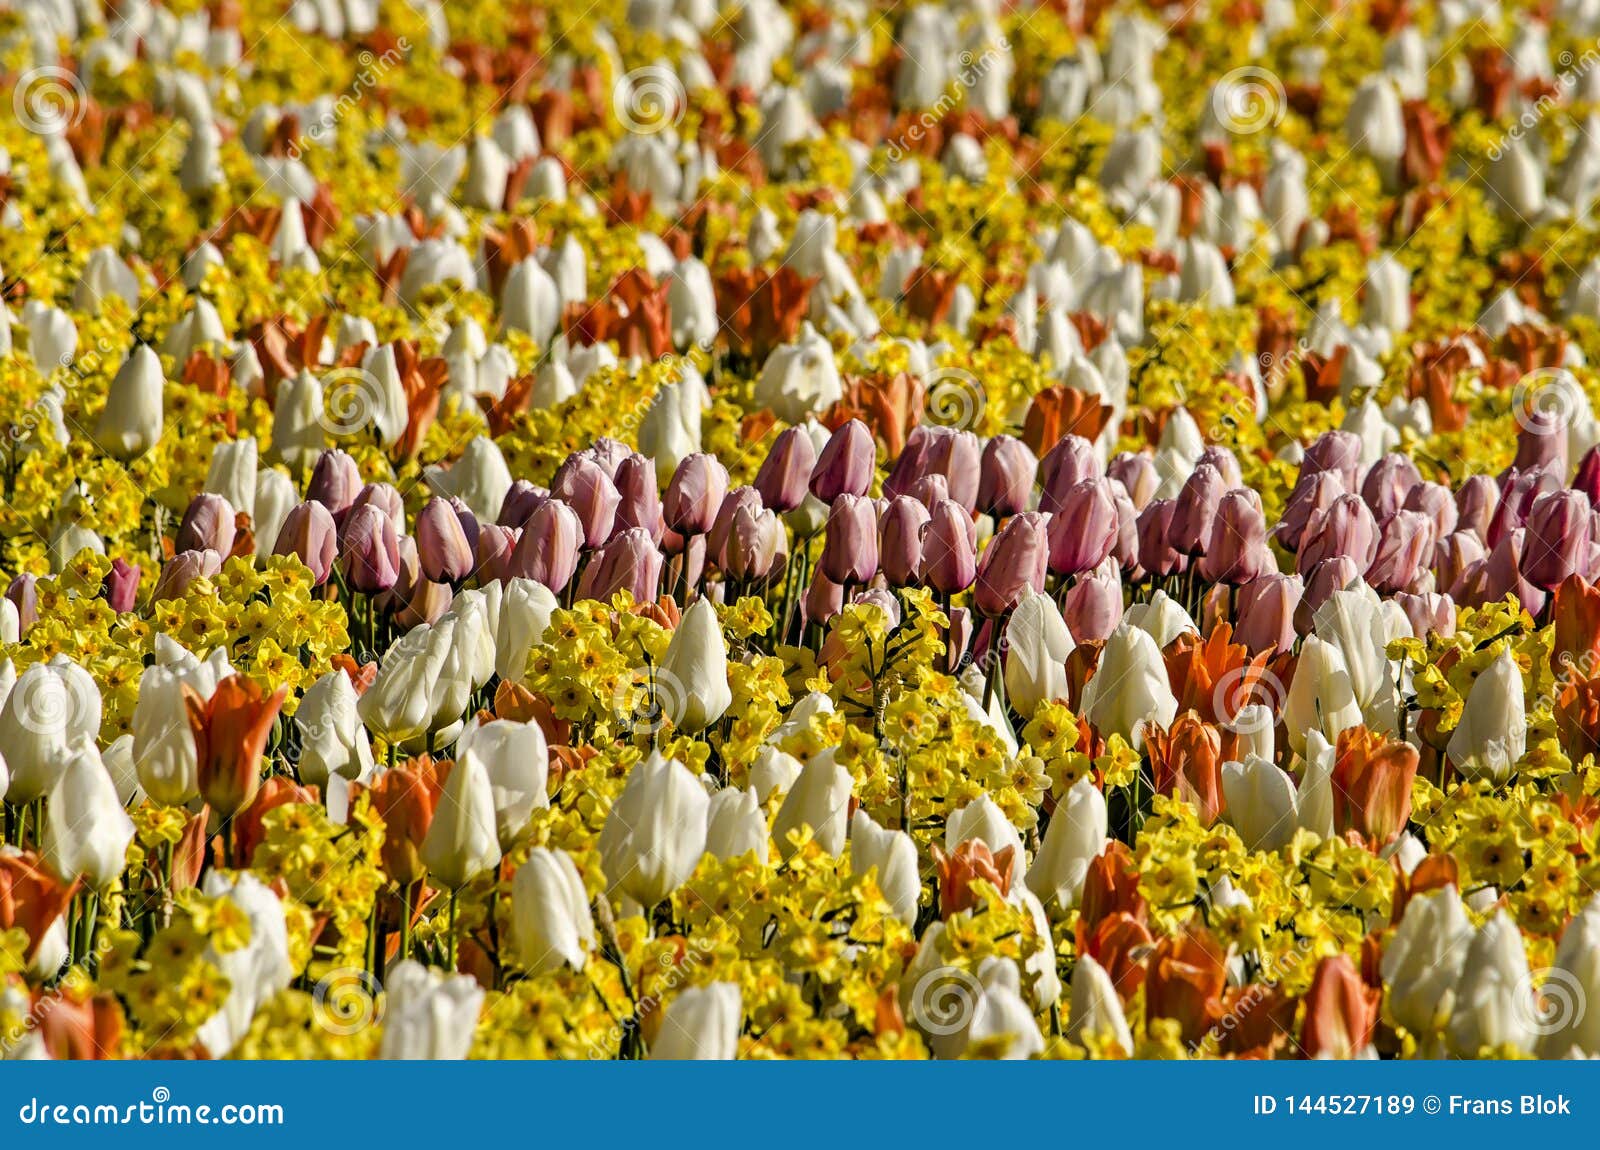 Tulips and daffodils stock image. Image of netherlands - 144527189